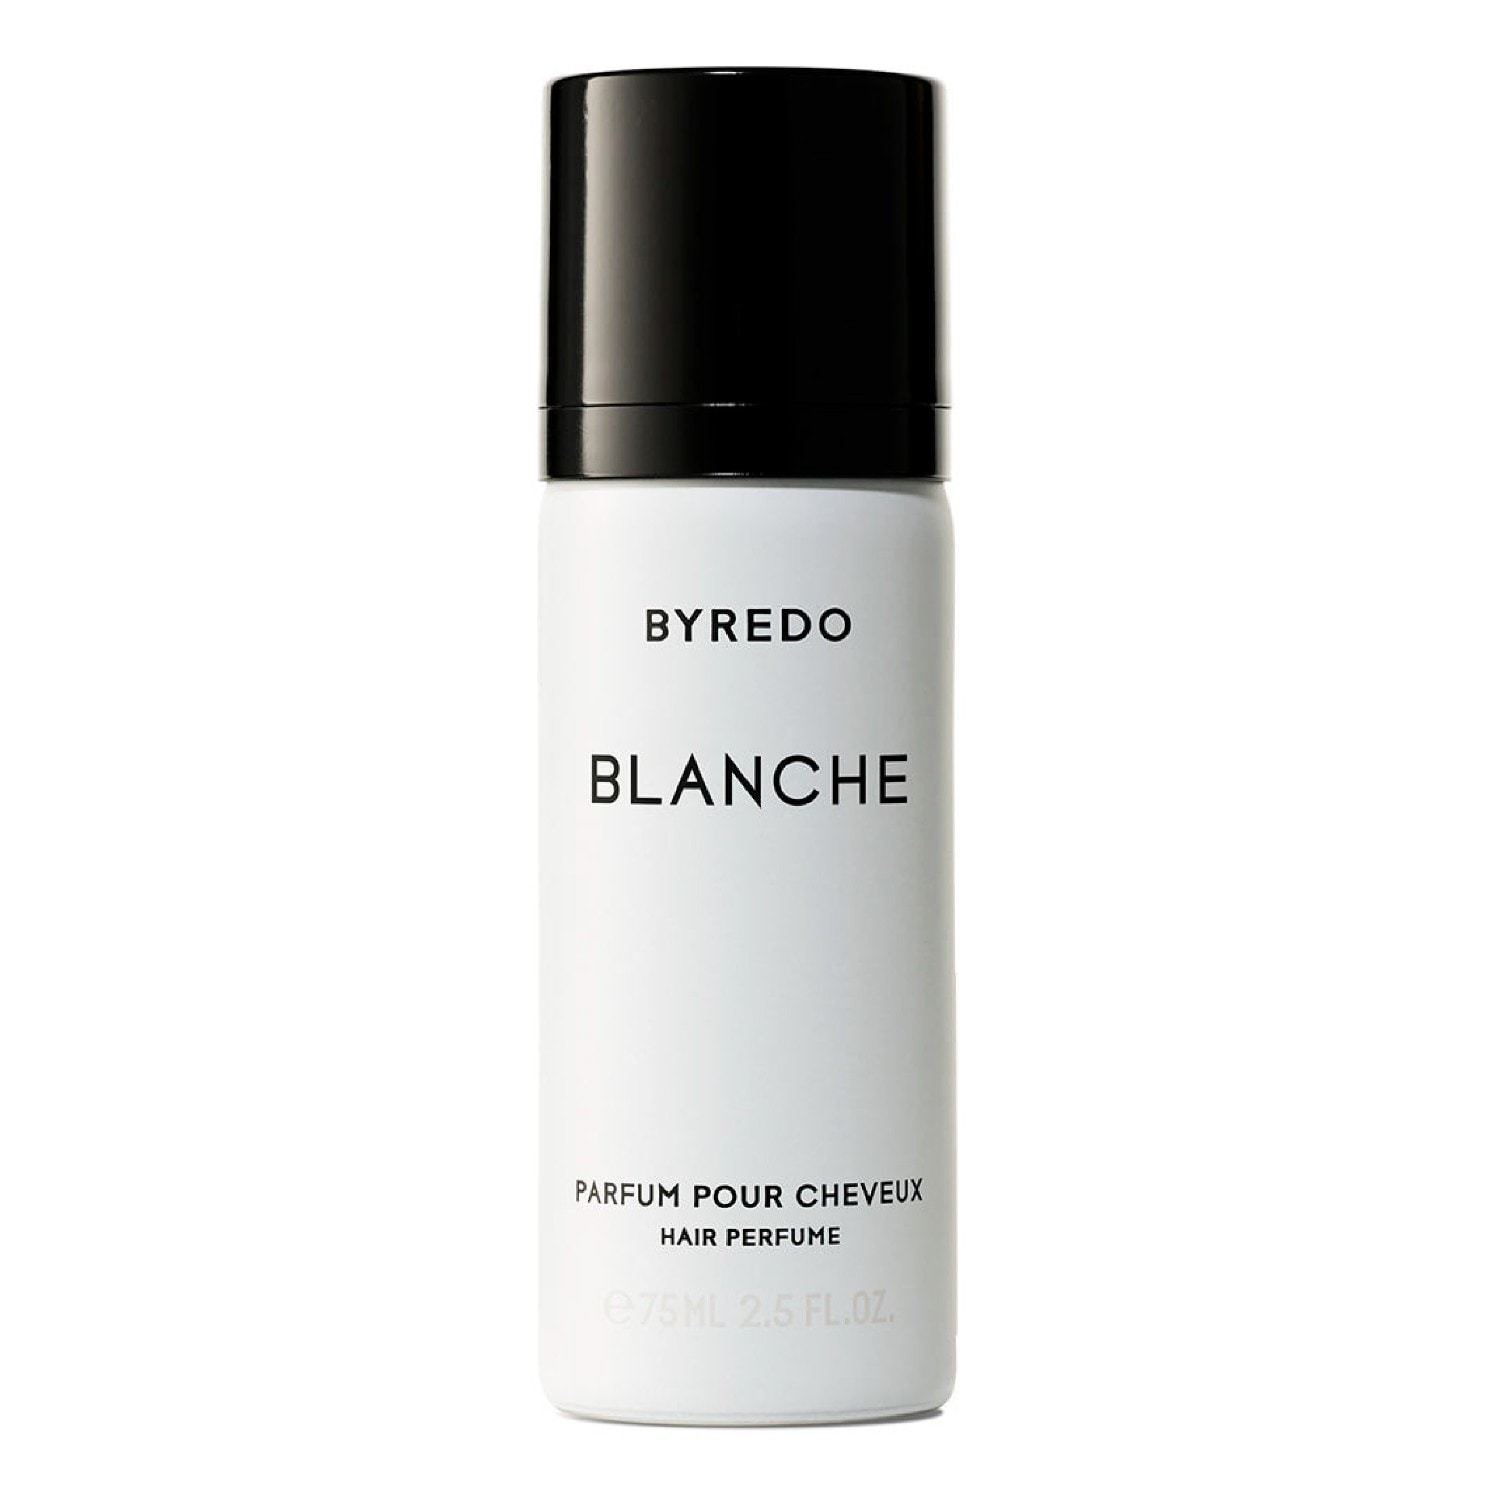 Byredo Hair perfume Blanche